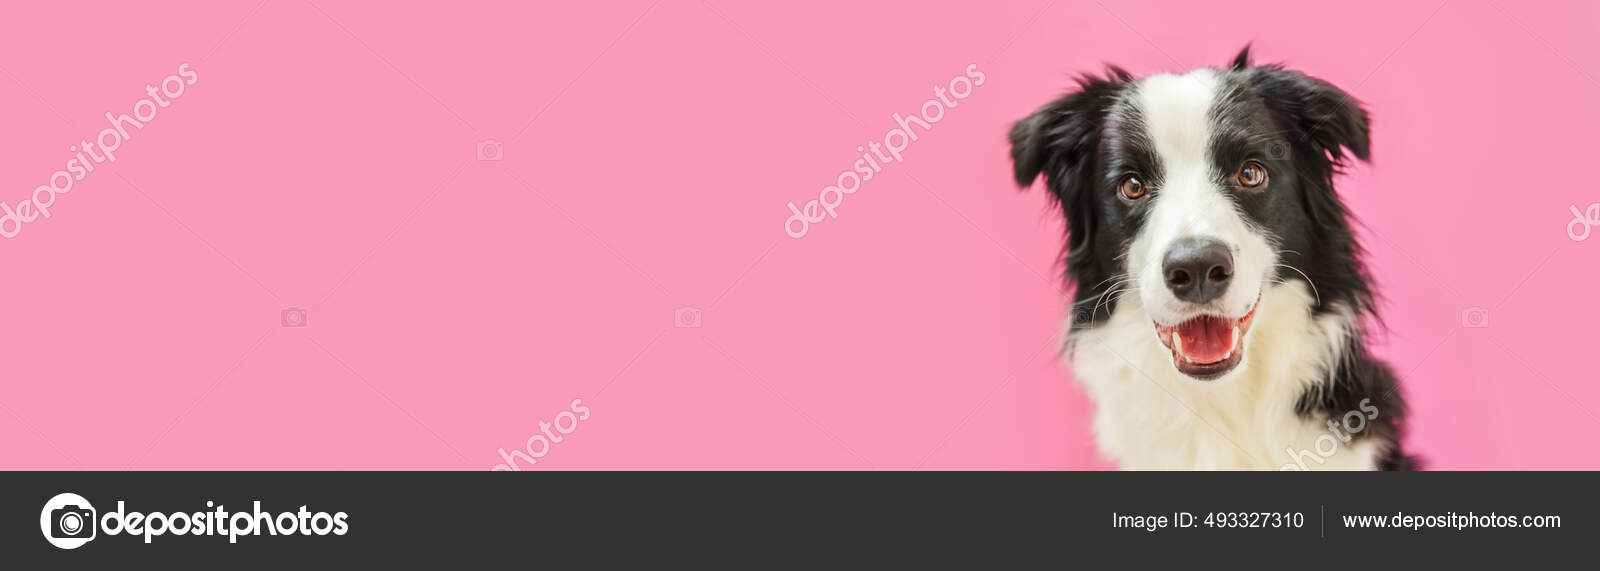 Funny studio portrait of cute smiling dog border collie in